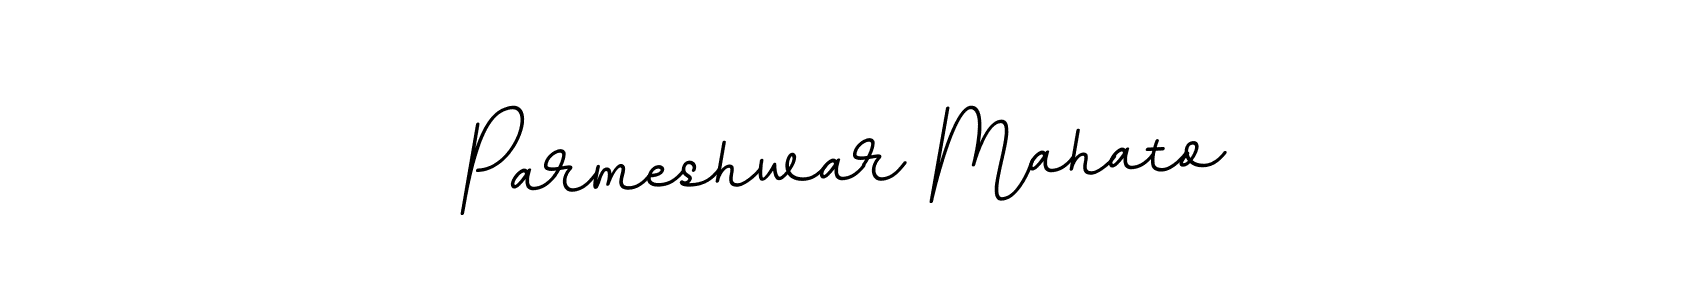 How to Draw Parmeshwar Mahato signature style? BallpointsItalic-DORy9 is a latest design signature styles for name Parmeshwar Mahato. Parmeshwar Mahato signature style 11 images and pictures png